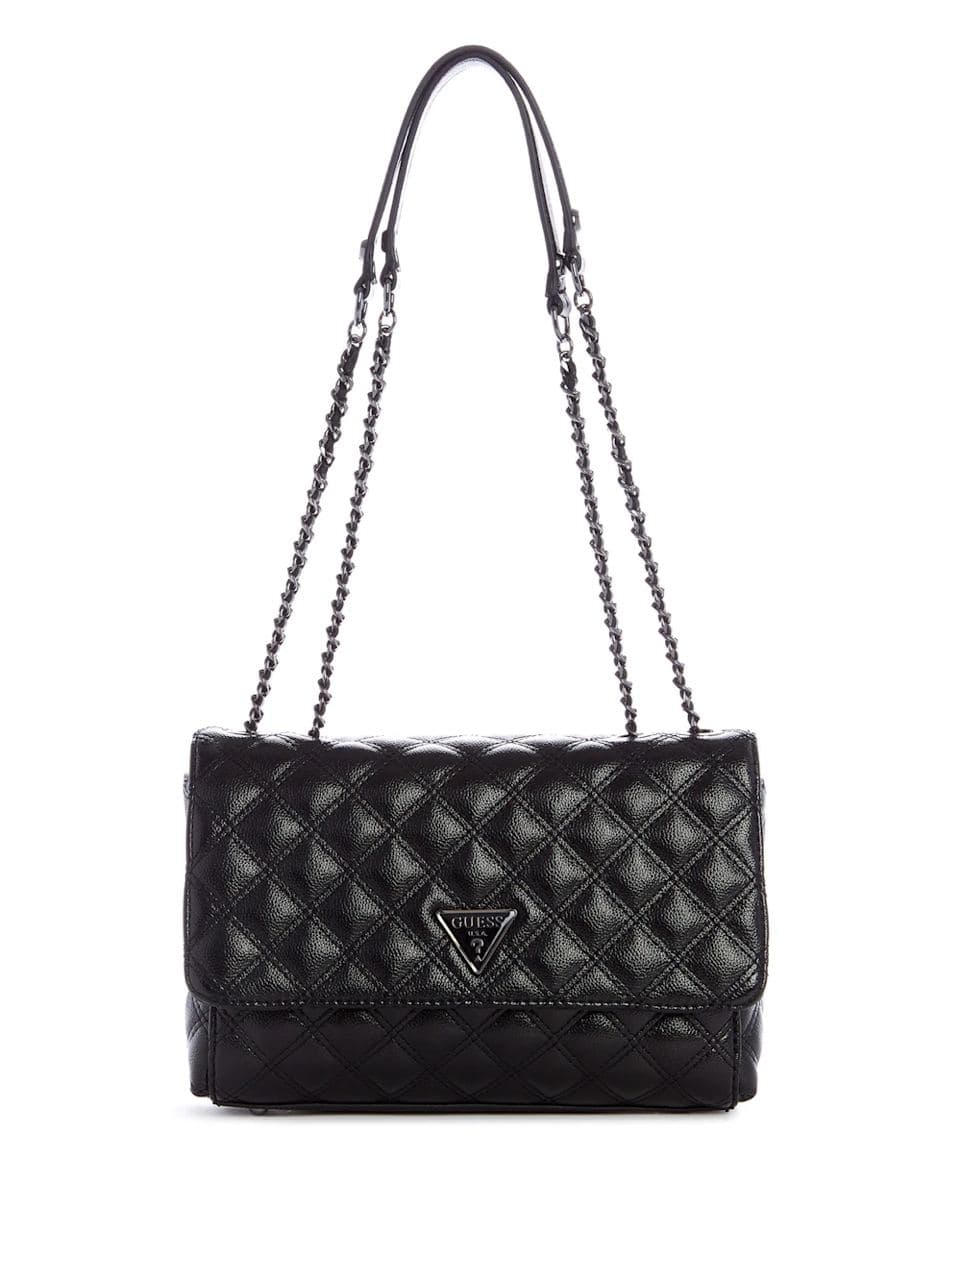 Guess Didi Handbag Ref 59815 BKW 32 x 21 x 11 cm, Black, One size :  Amazon.co.uk: Fashion